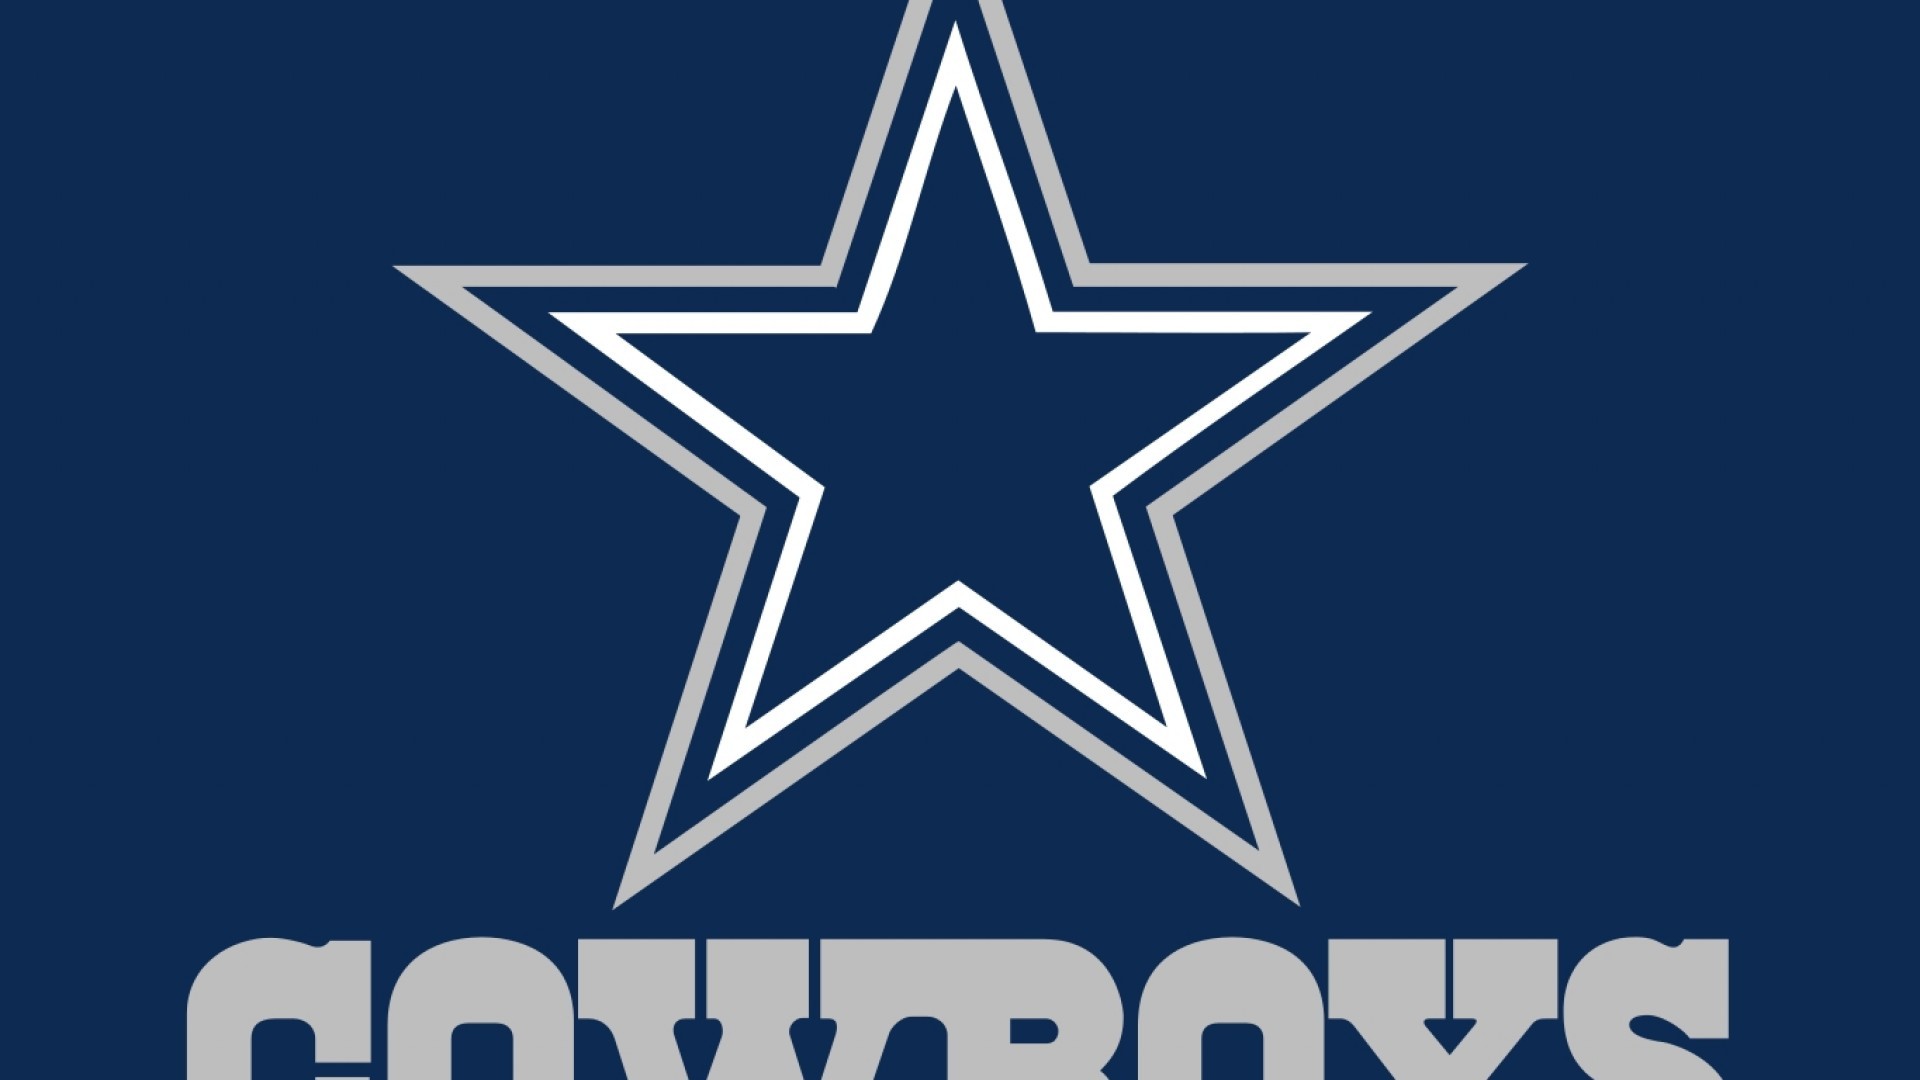 1920x1080 Dallas Cowboys Star wallpaper